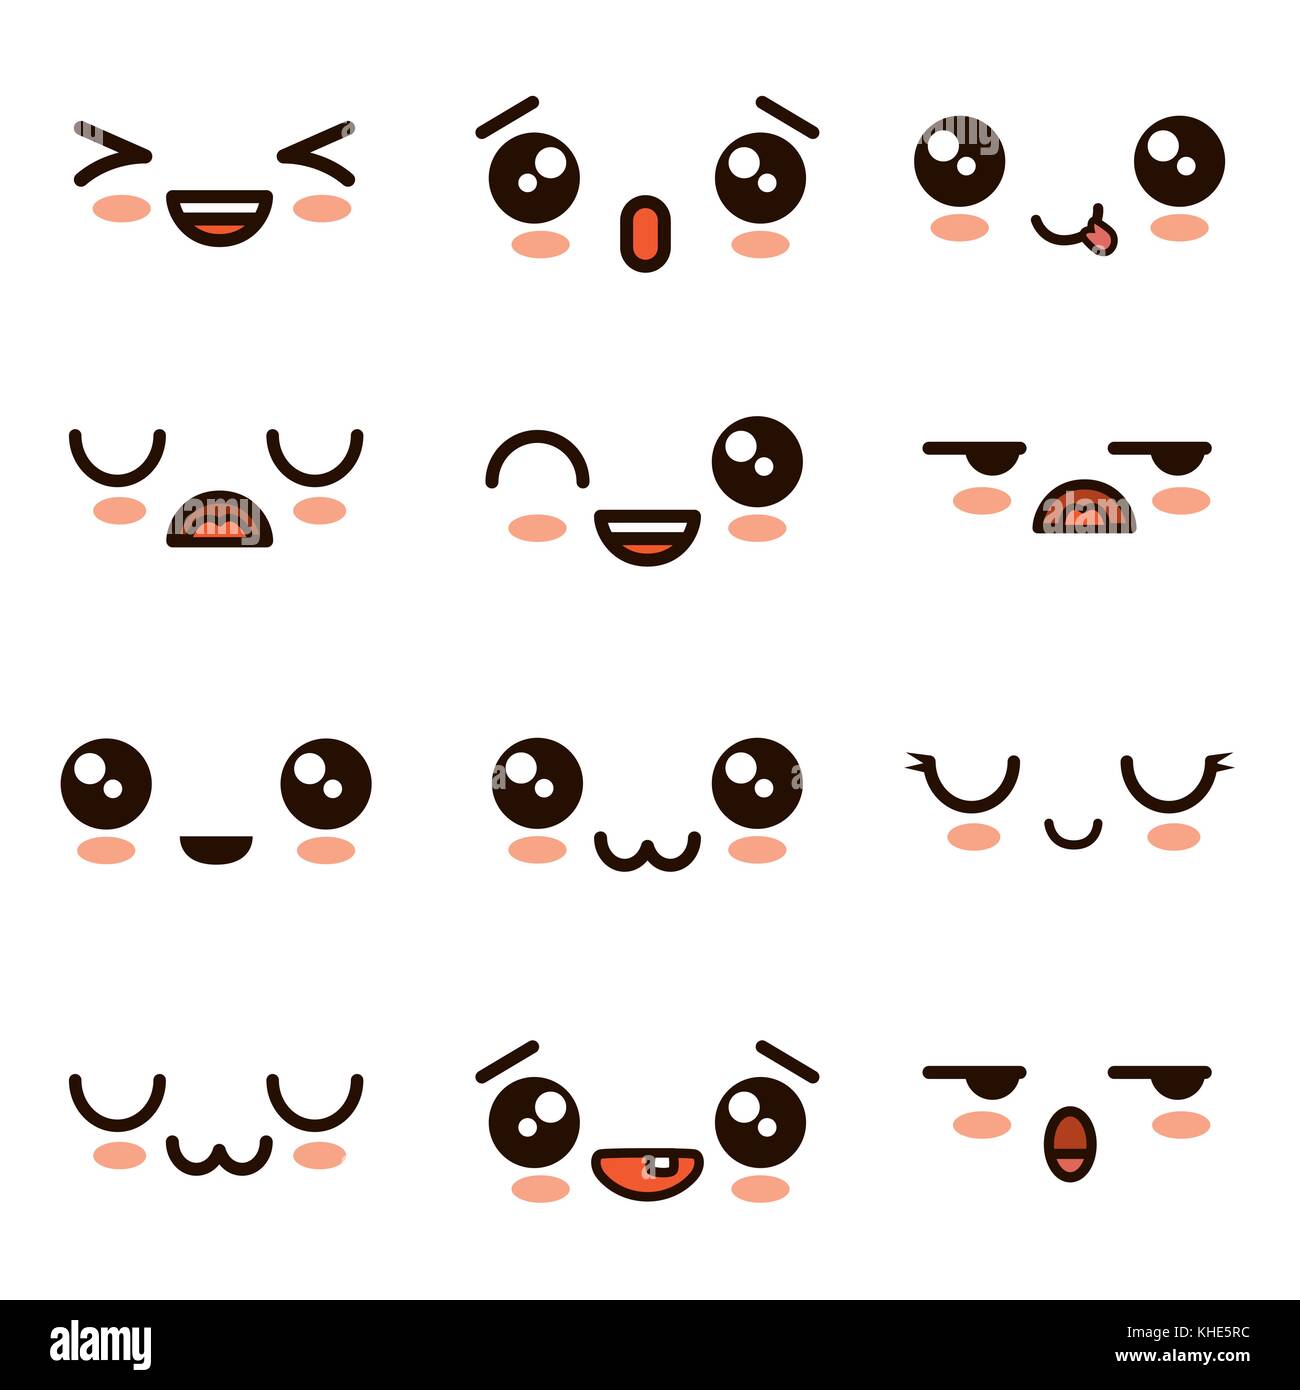 Cute caras kawaii emoji cartoon Imagen Vector de stock - Alamy